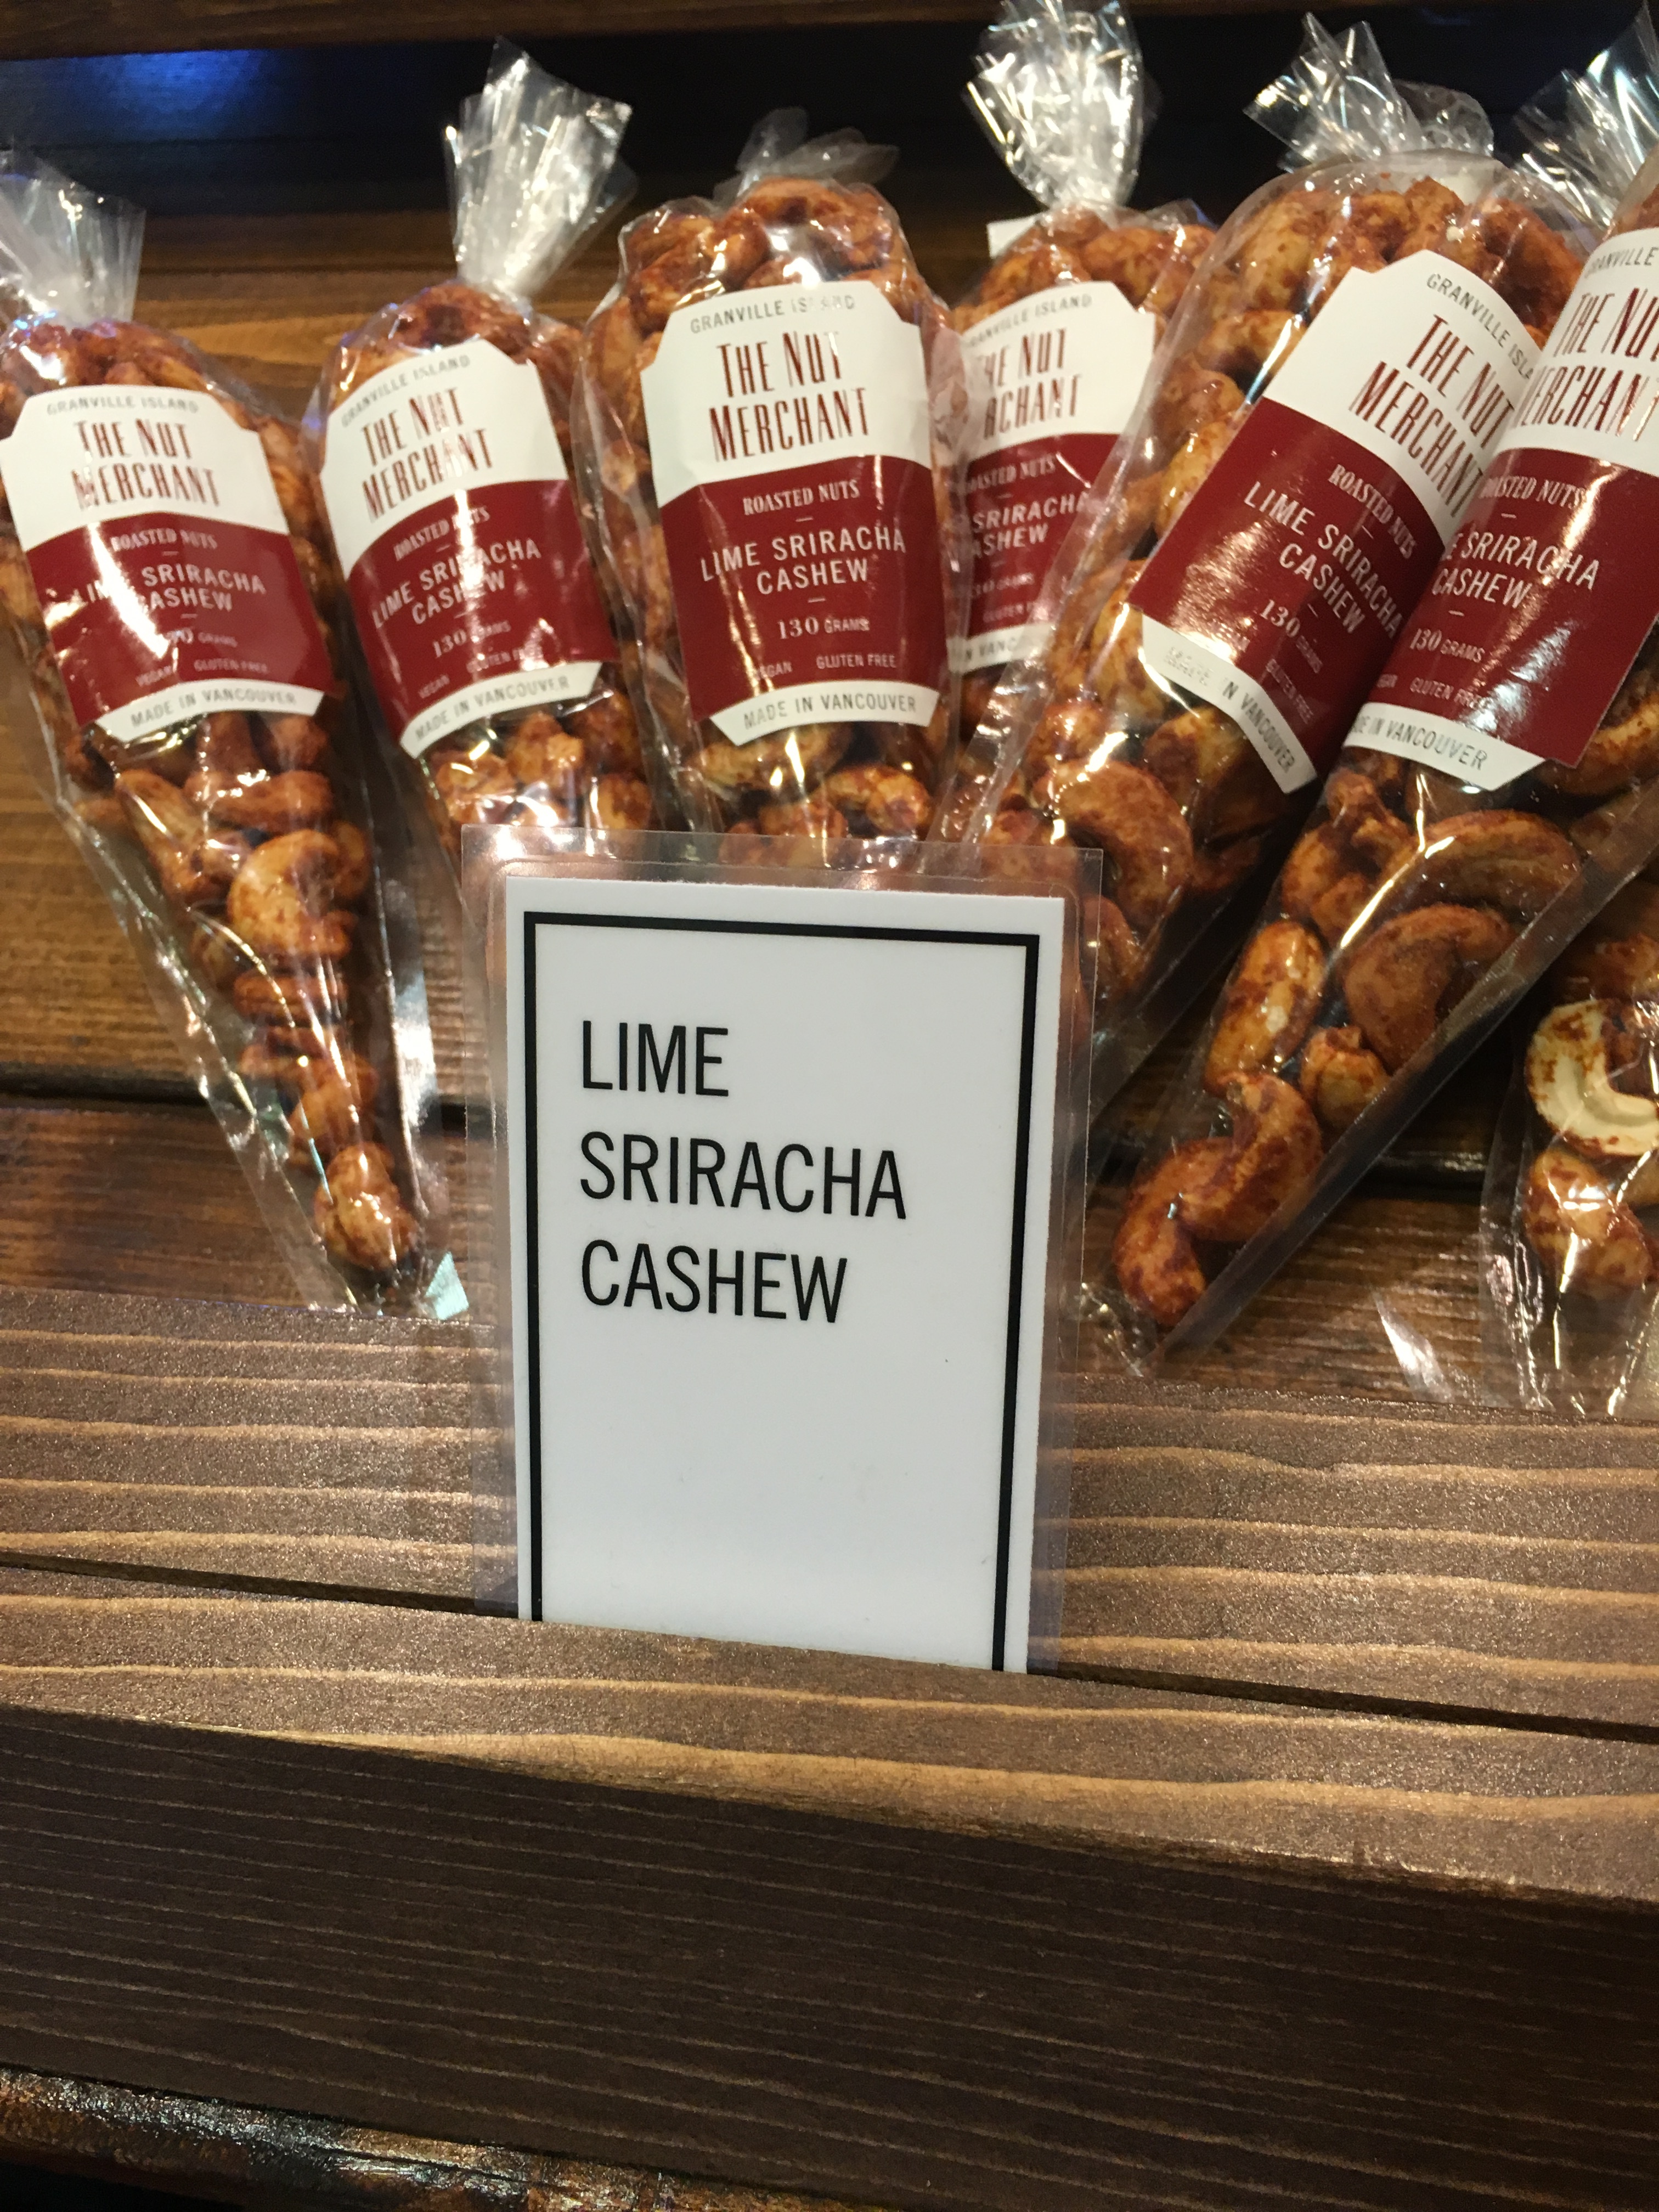 Lime Sriracha Cashews from The Nut Merchant